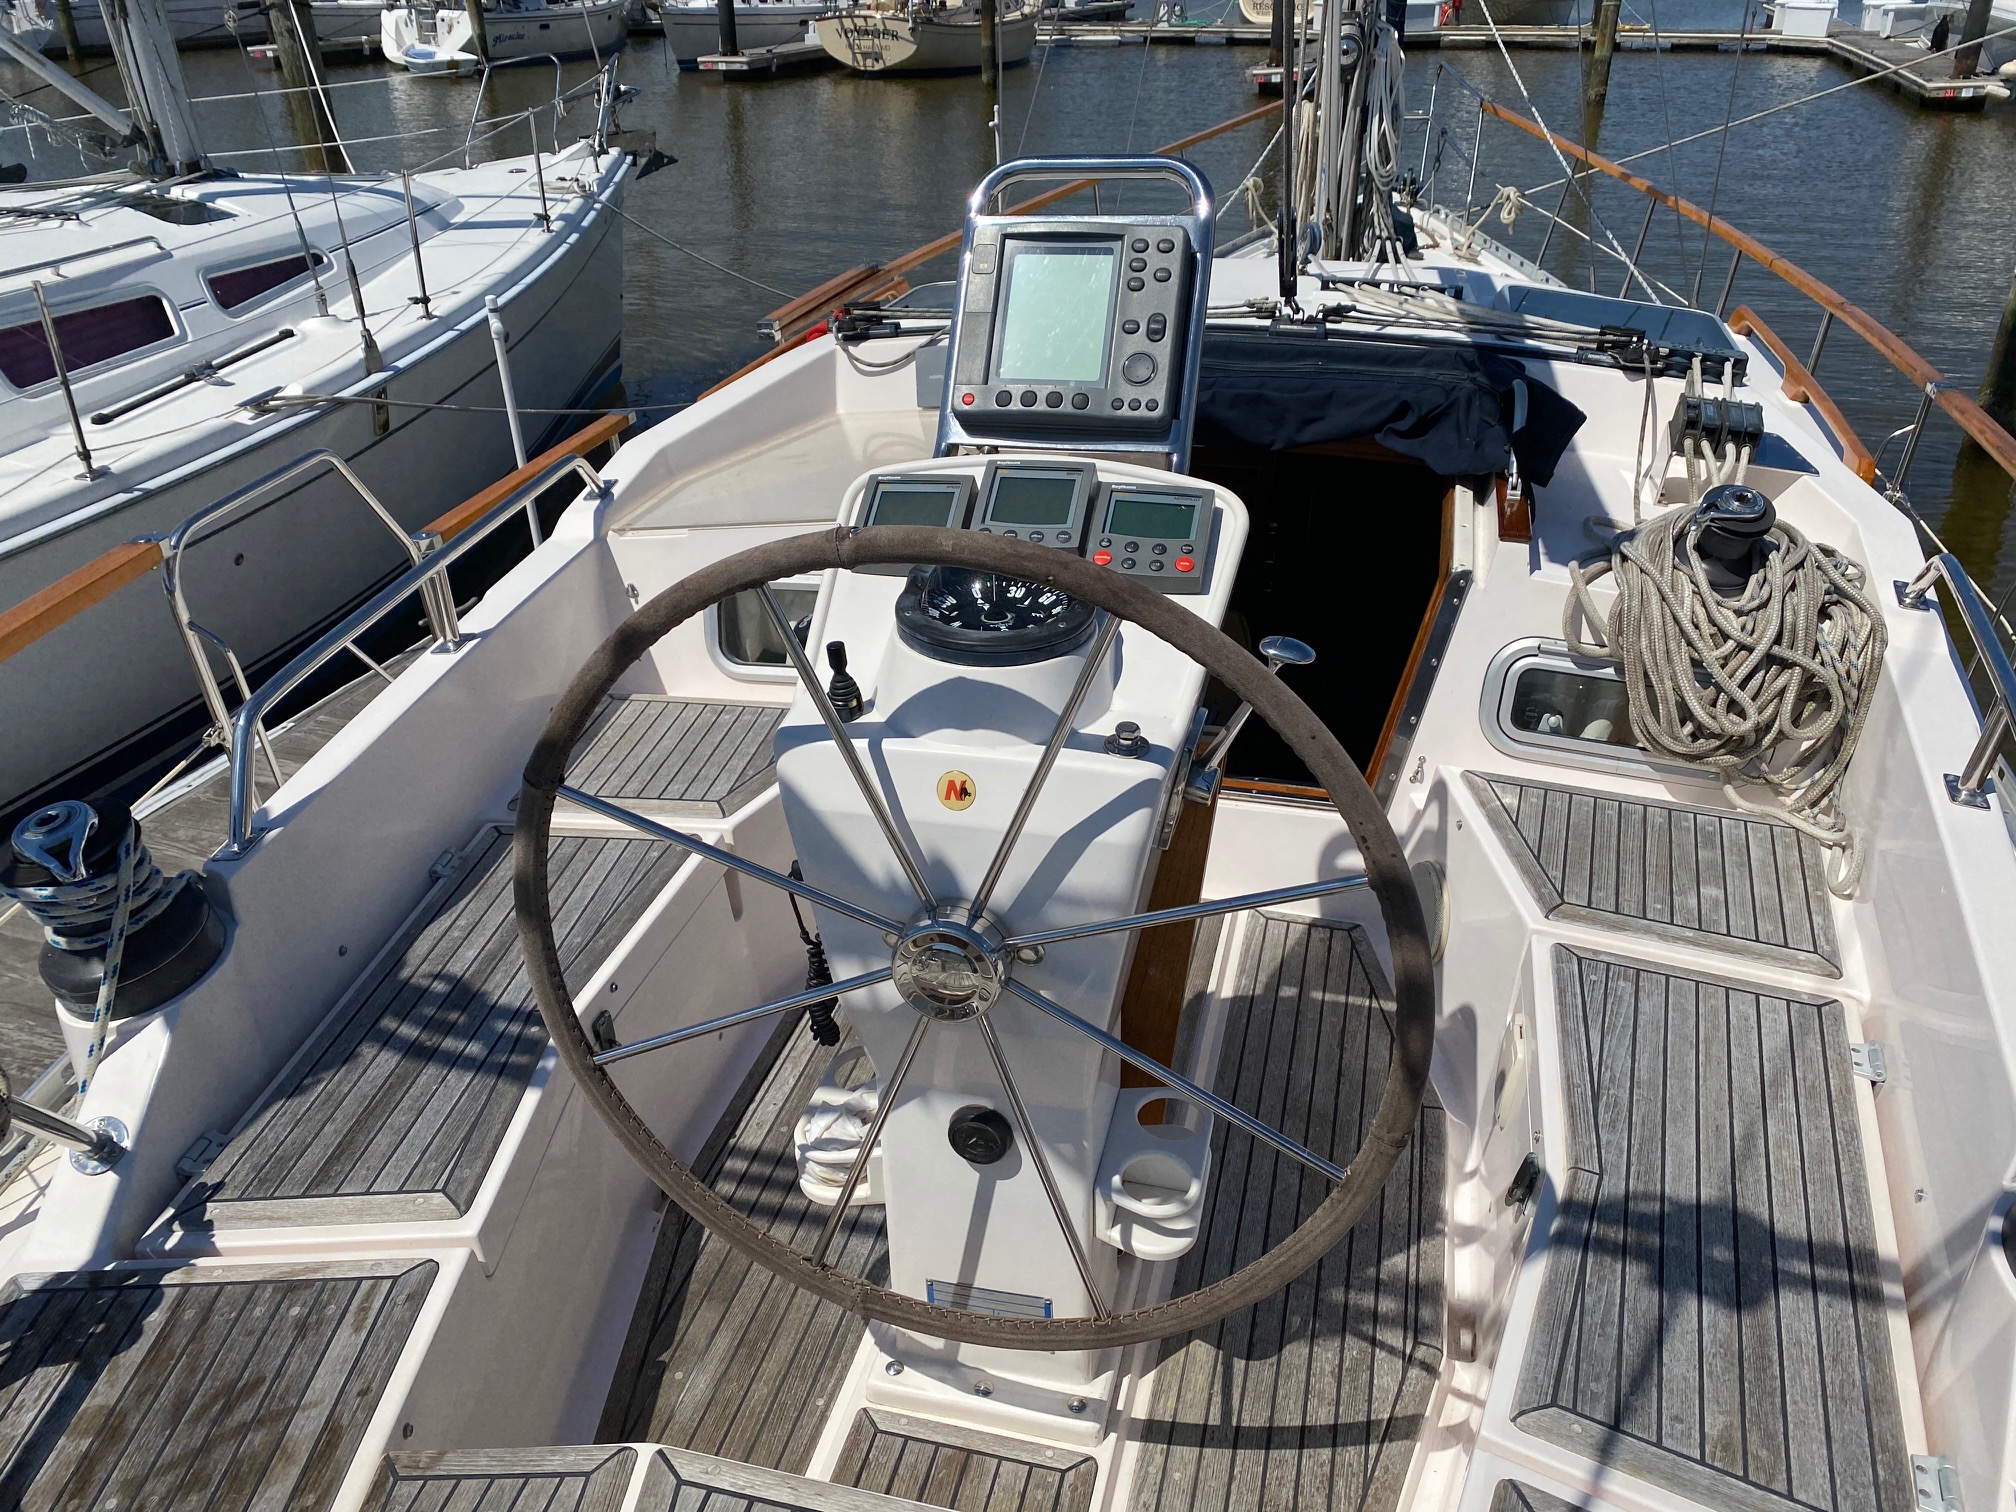 Fierce Spirit Yacht Brokers Of Annapolis